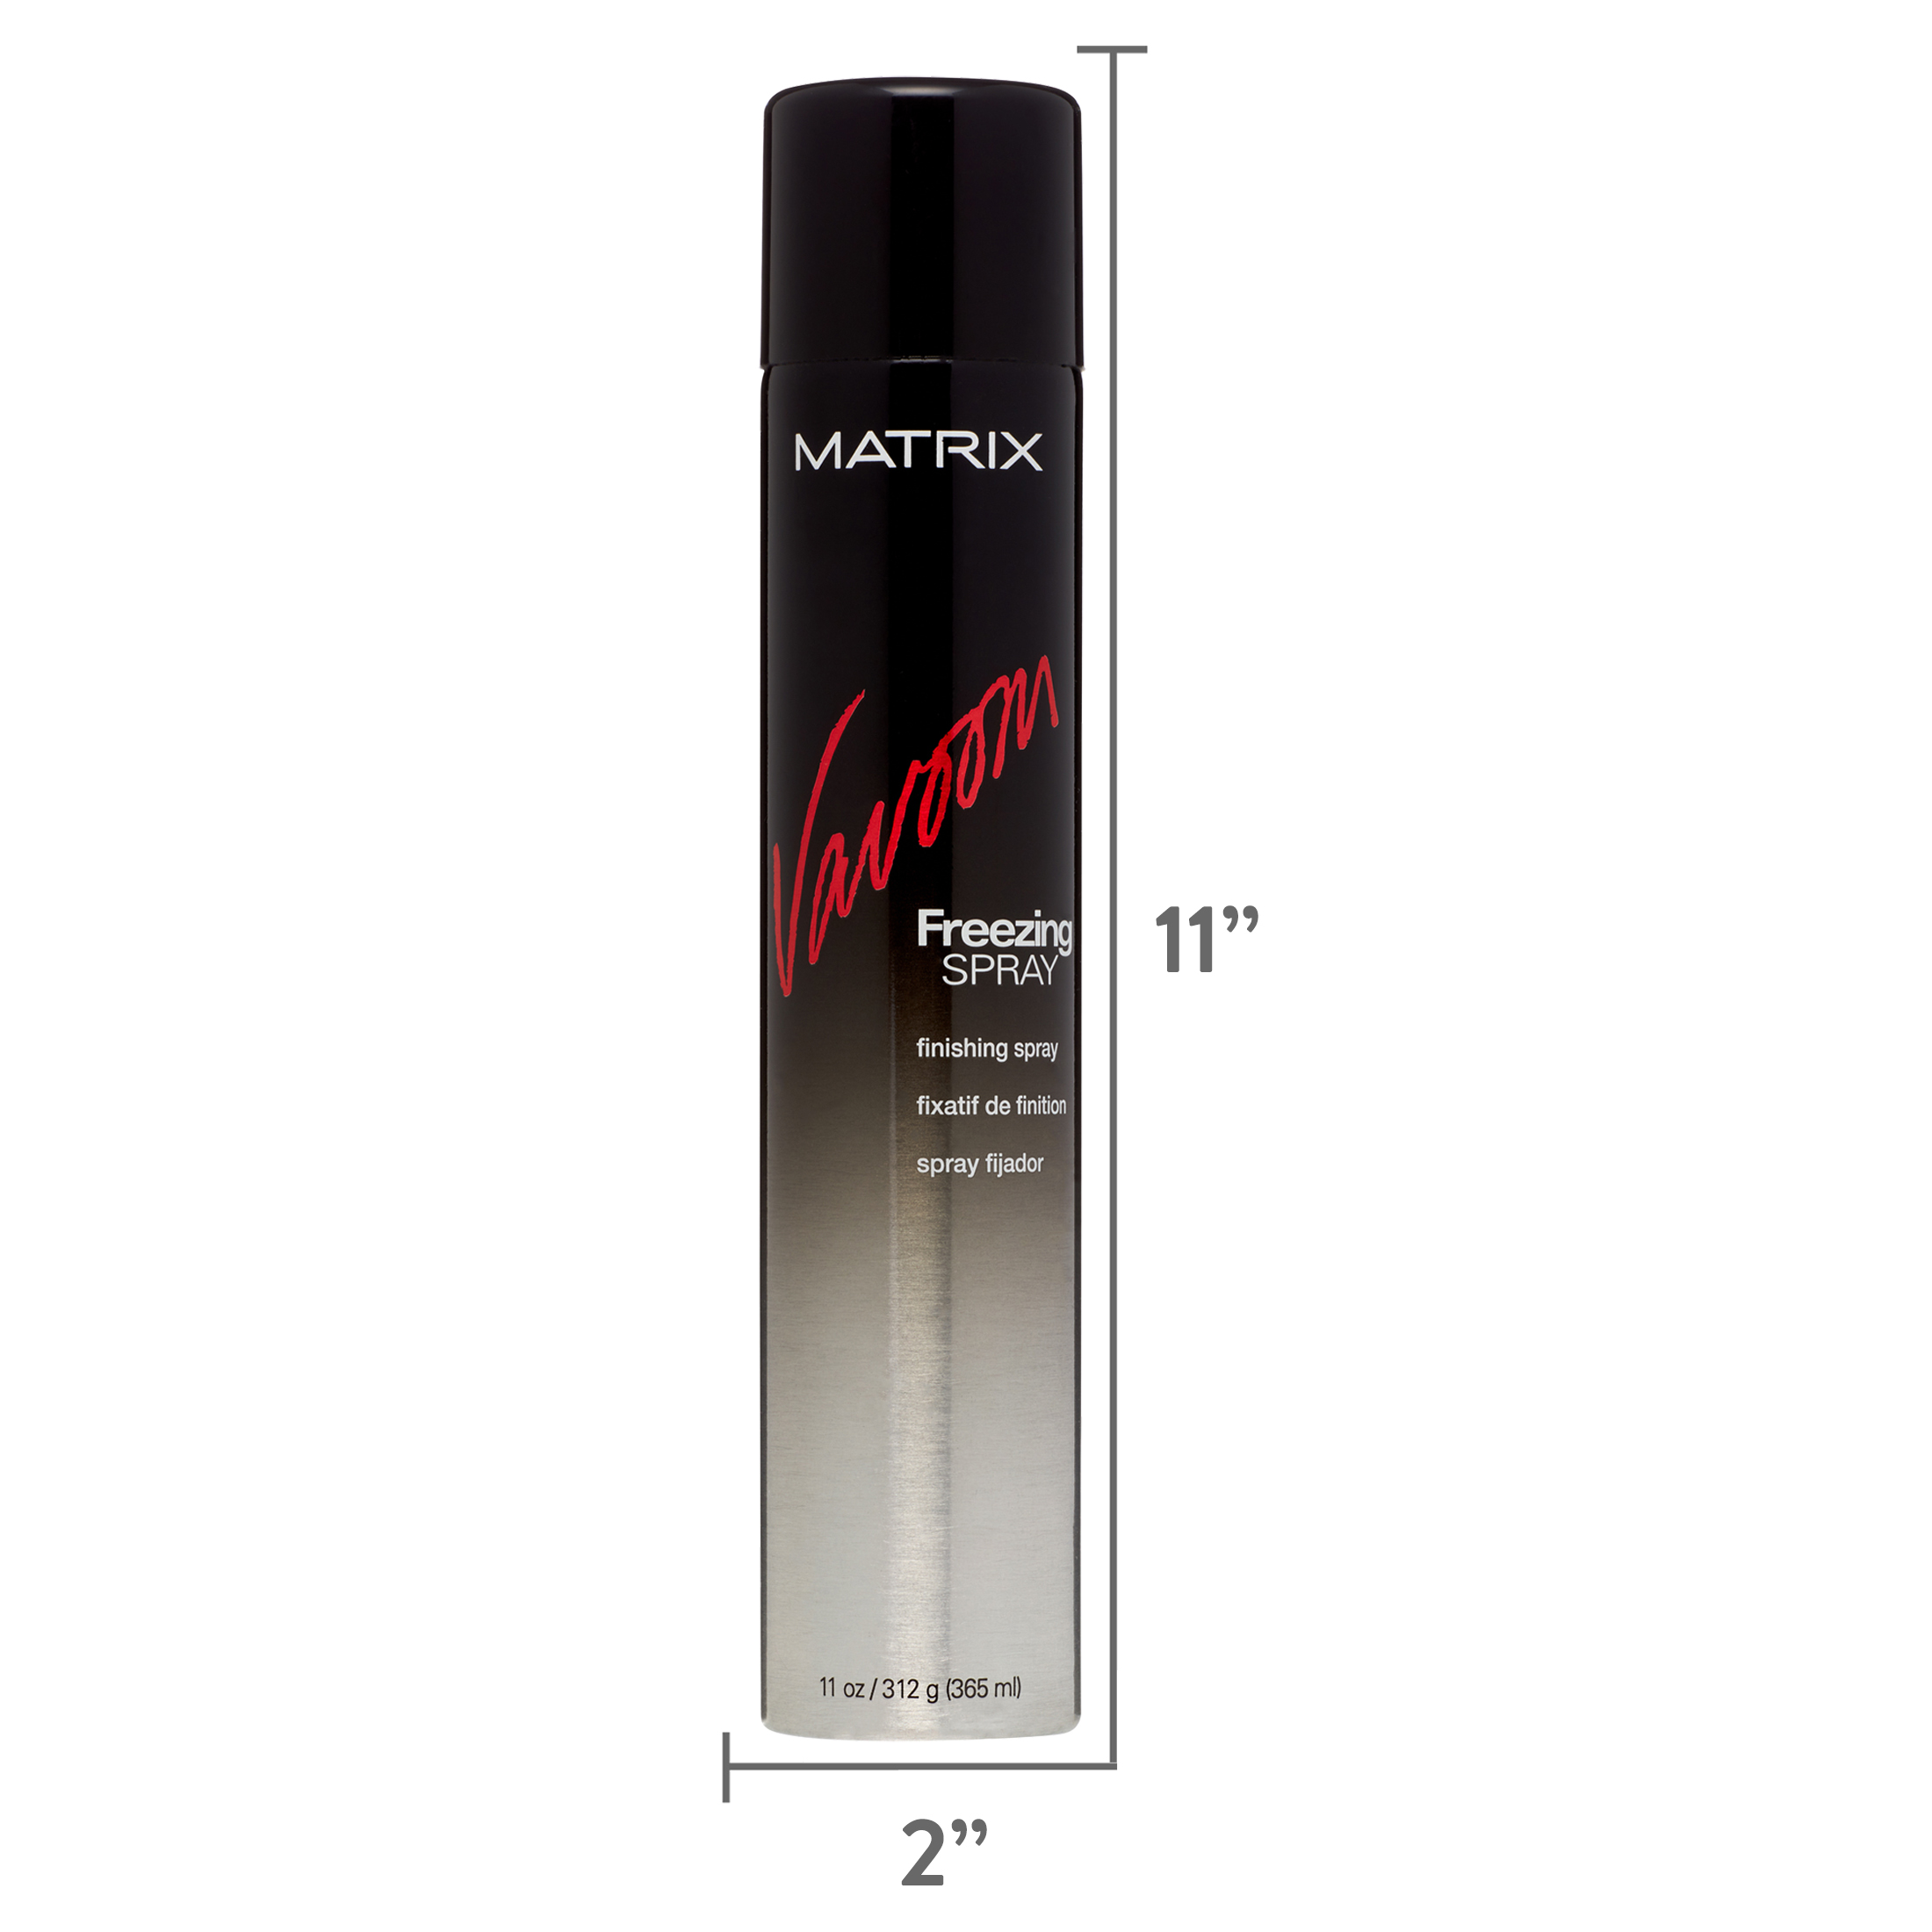 Vavoom Freezing Spray by Matrix for Unisex - 11 oz Hairspray - image 3 of 6